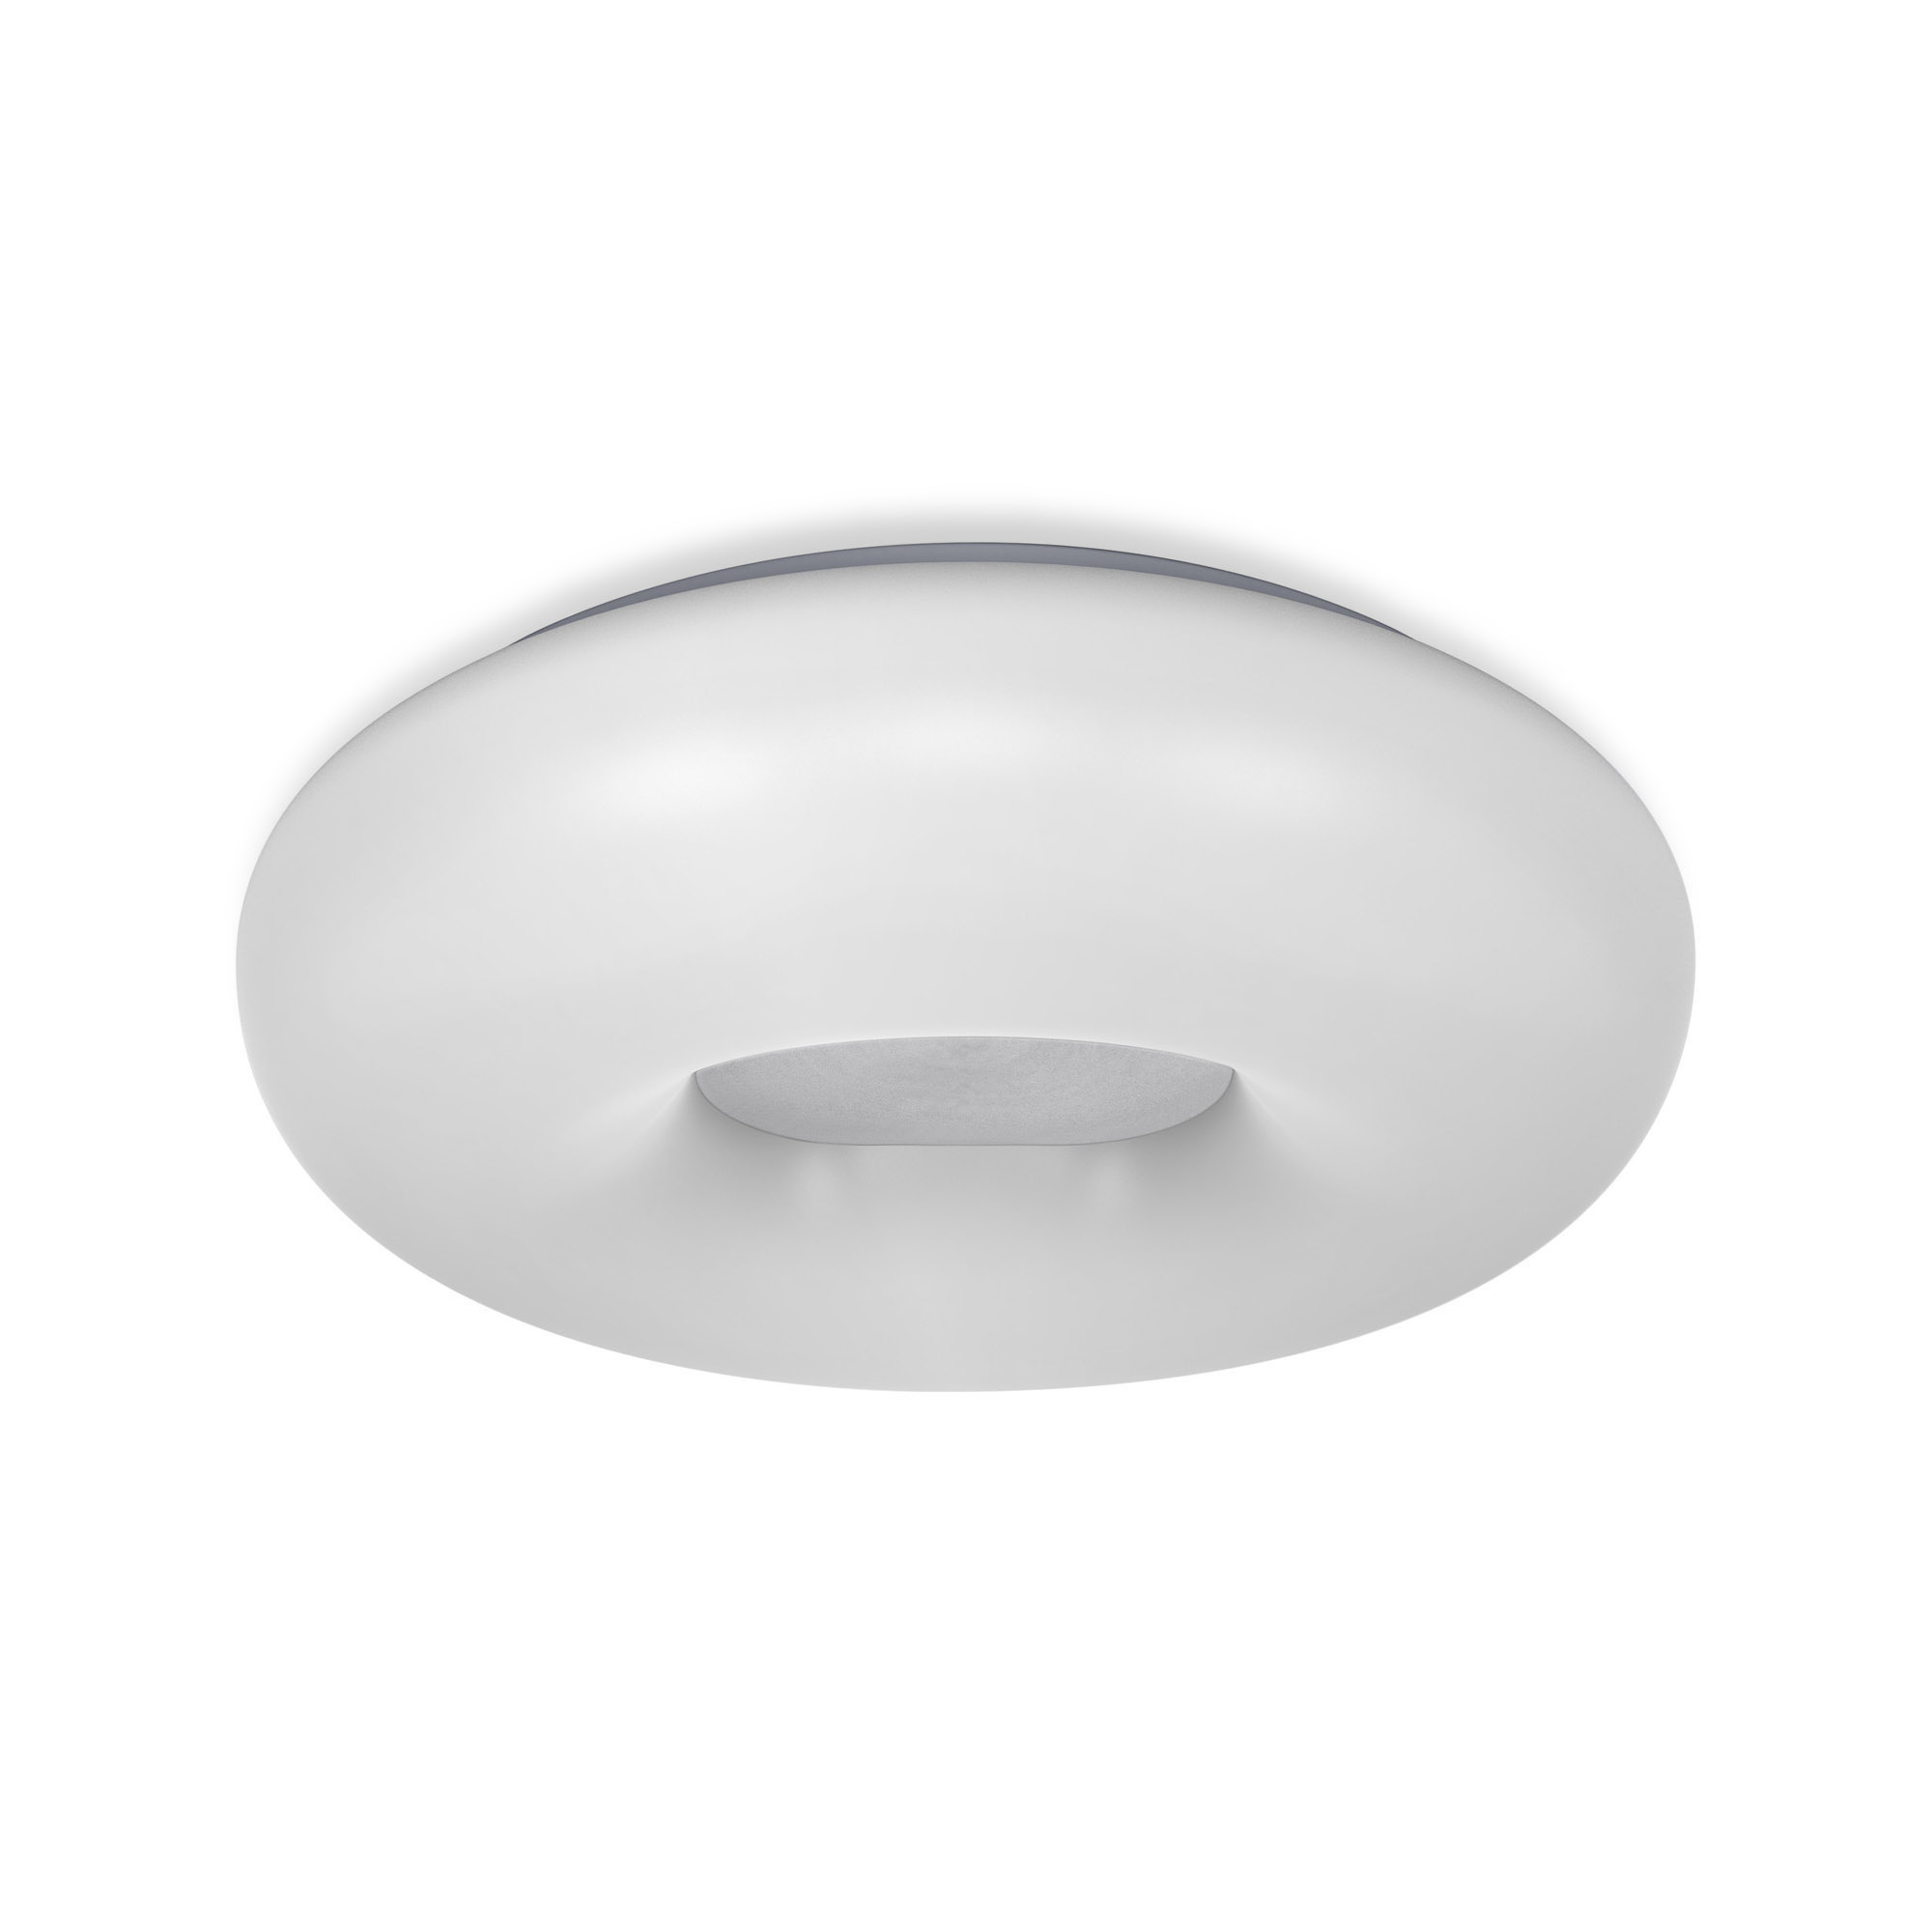 LEDVANCE SMART+ WiFi Tunable White LED Ceiling Light ORBIS Donut 400mm white 2500lm